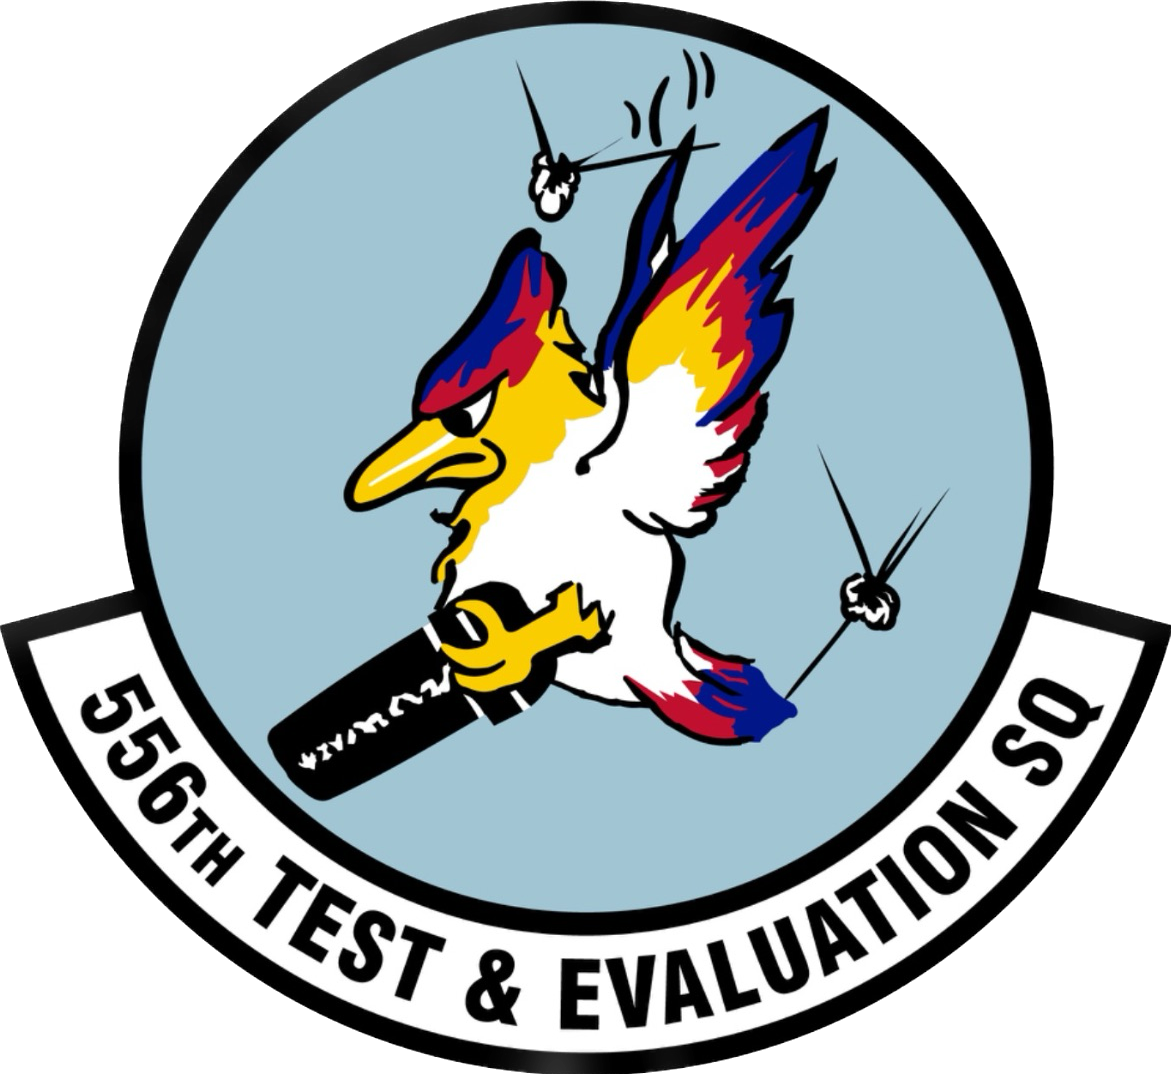 556th Test & Evaluation Sq - ZAP